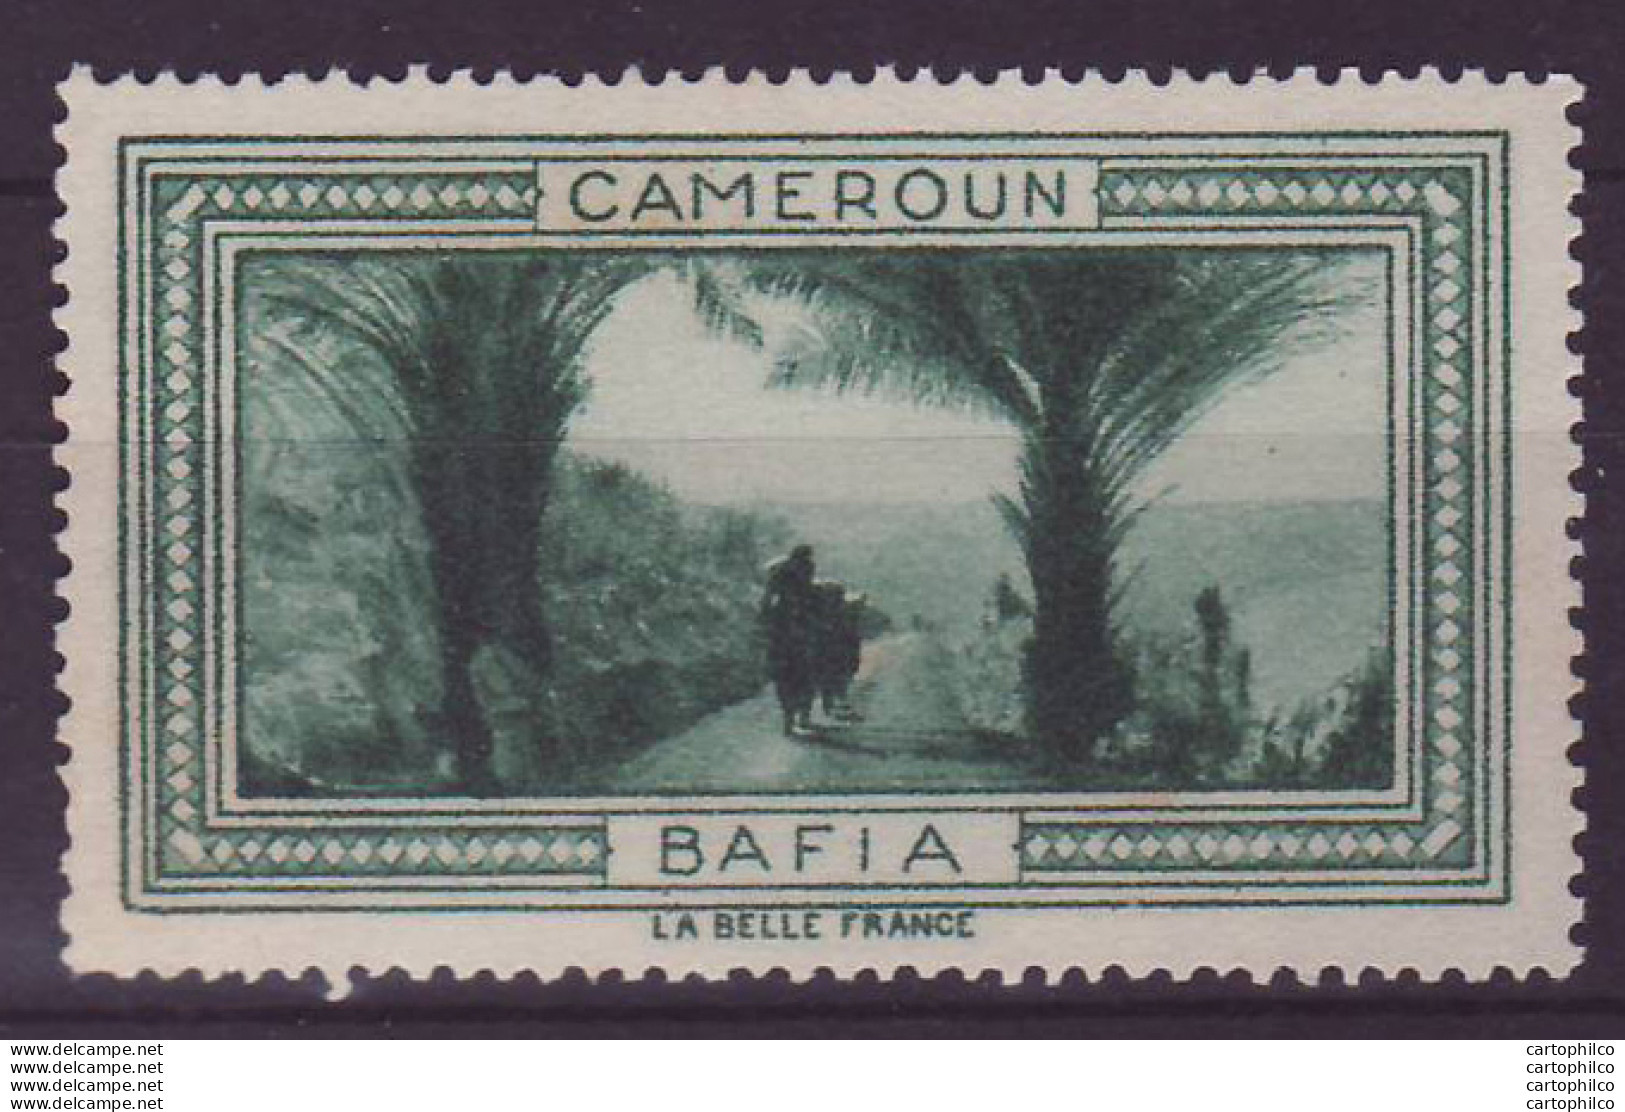 Vignette ** Cameroun Bafia - Unused Stamps